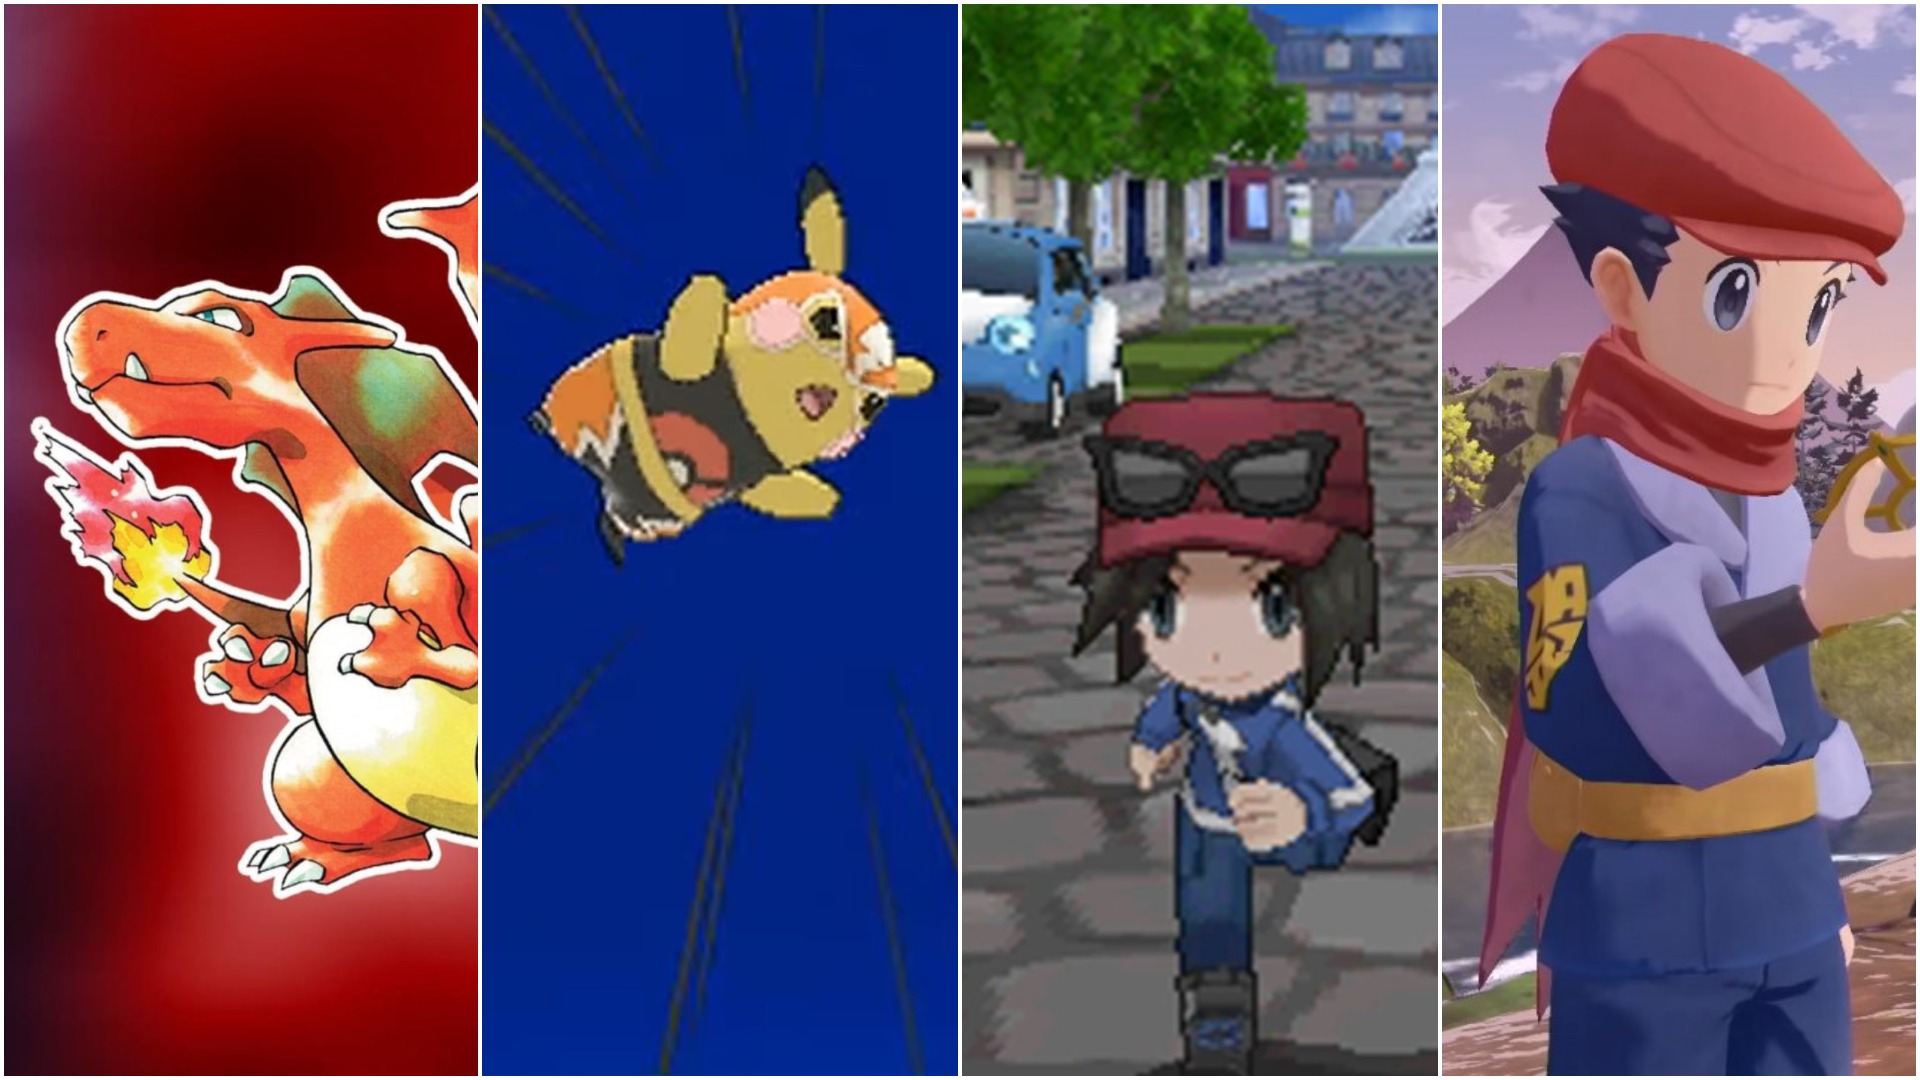 Pokémon: Every Gen 1 Game Ranked